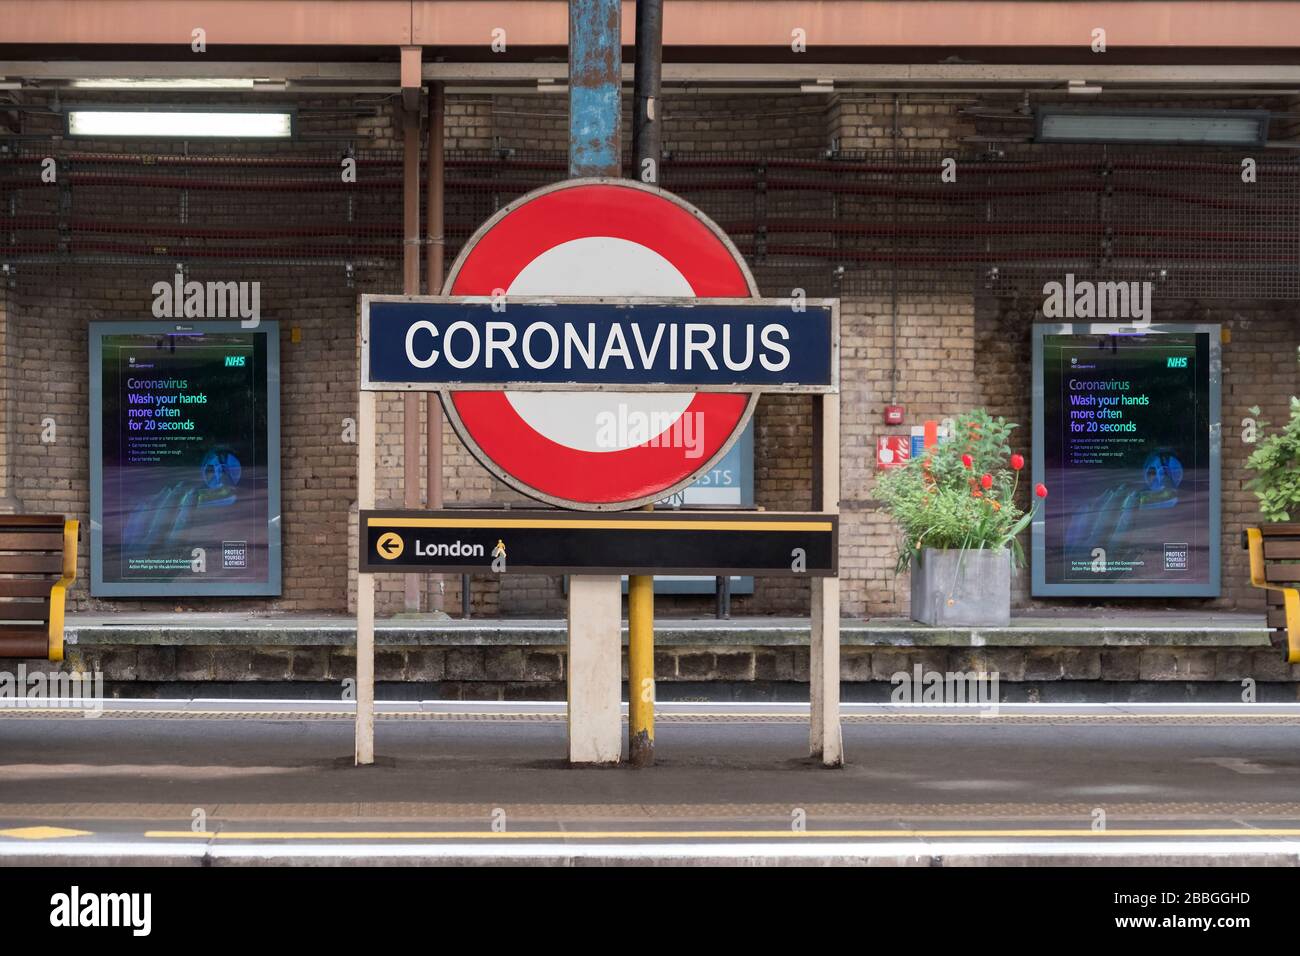 Coronavirus Covid-19 Outbreak Illustration, London Underground System, London, England, UK Stock Photo